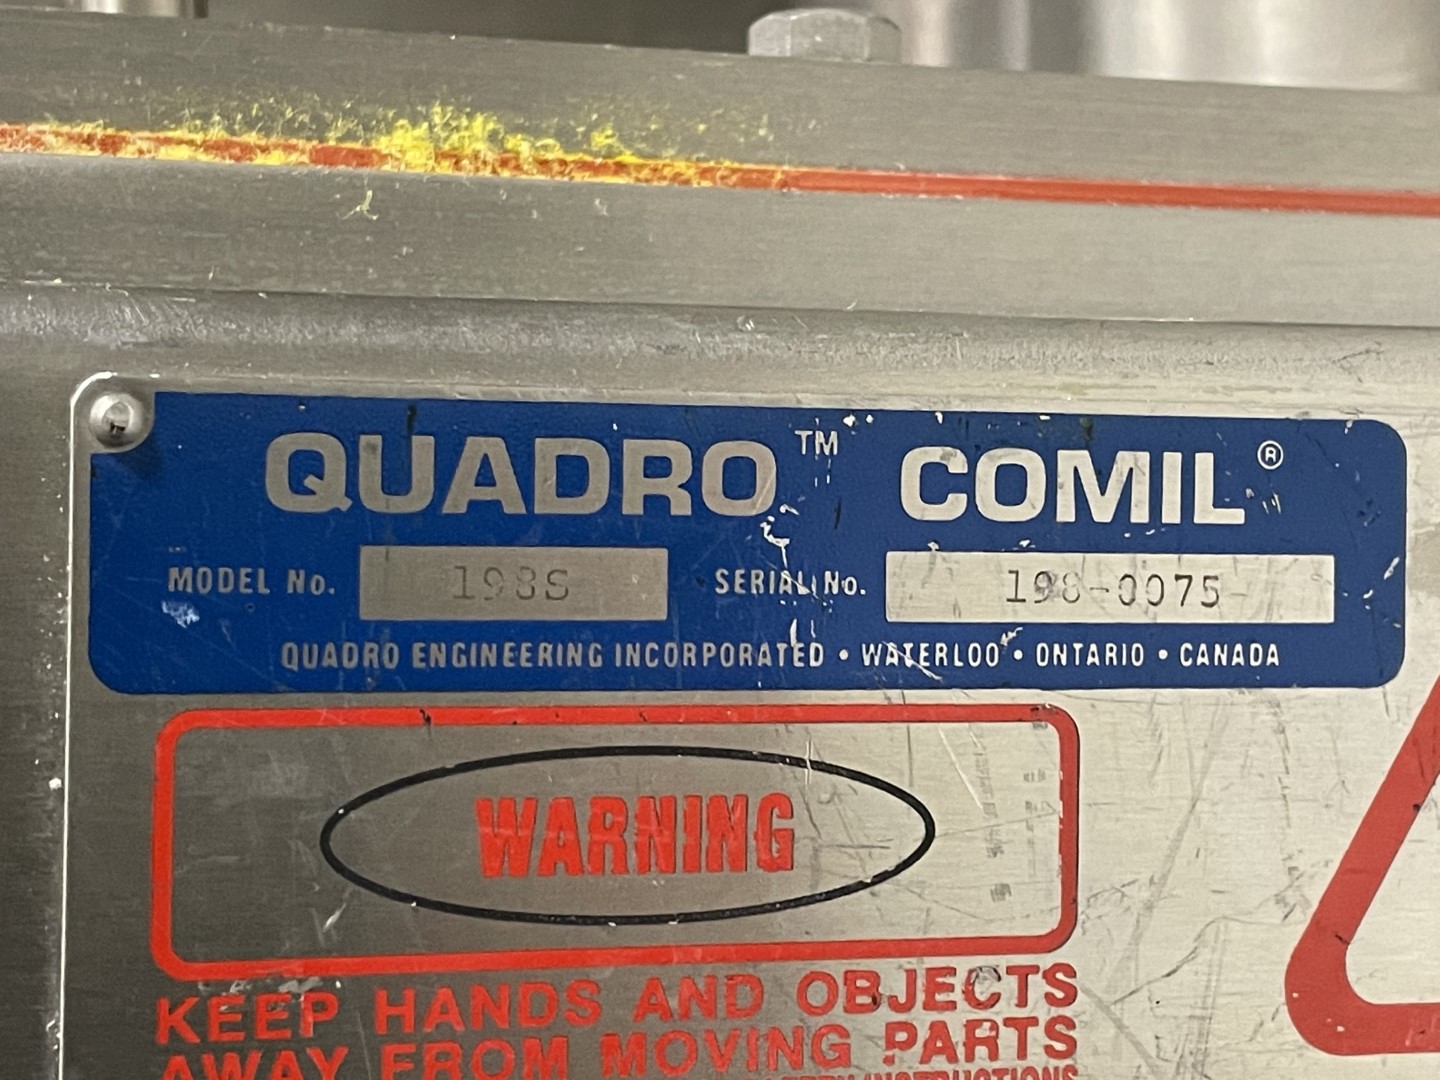 Quadro Comil, Model 198, S/S, 25 HP